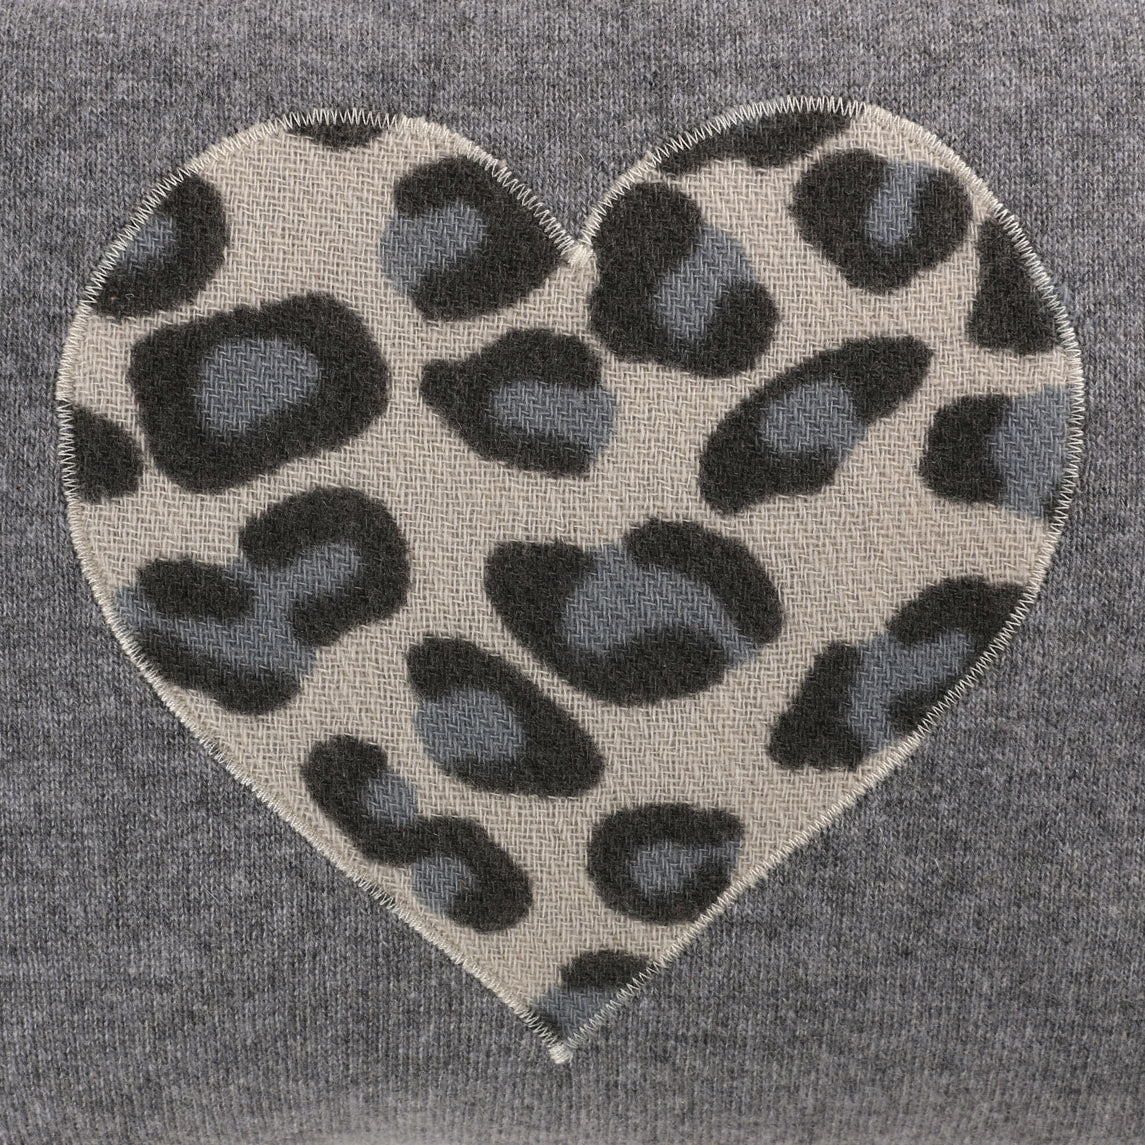 Grey Marl Leopard Heart Cushion - Crumpet Chowk